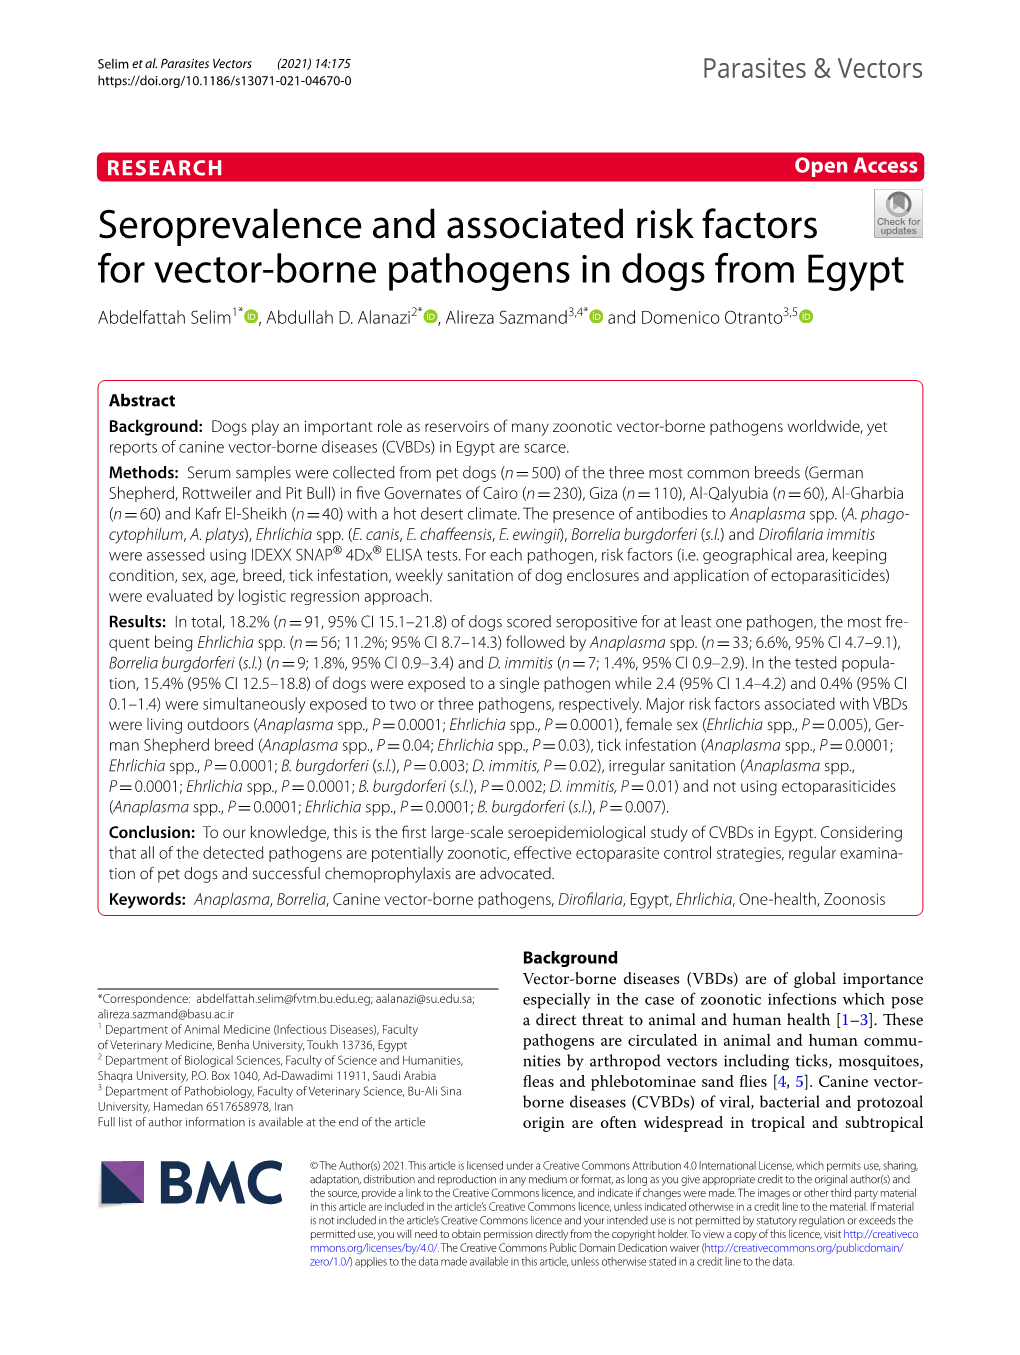 Seroprevalence and Associated Risk Factors for Vector-Borne Pathogens